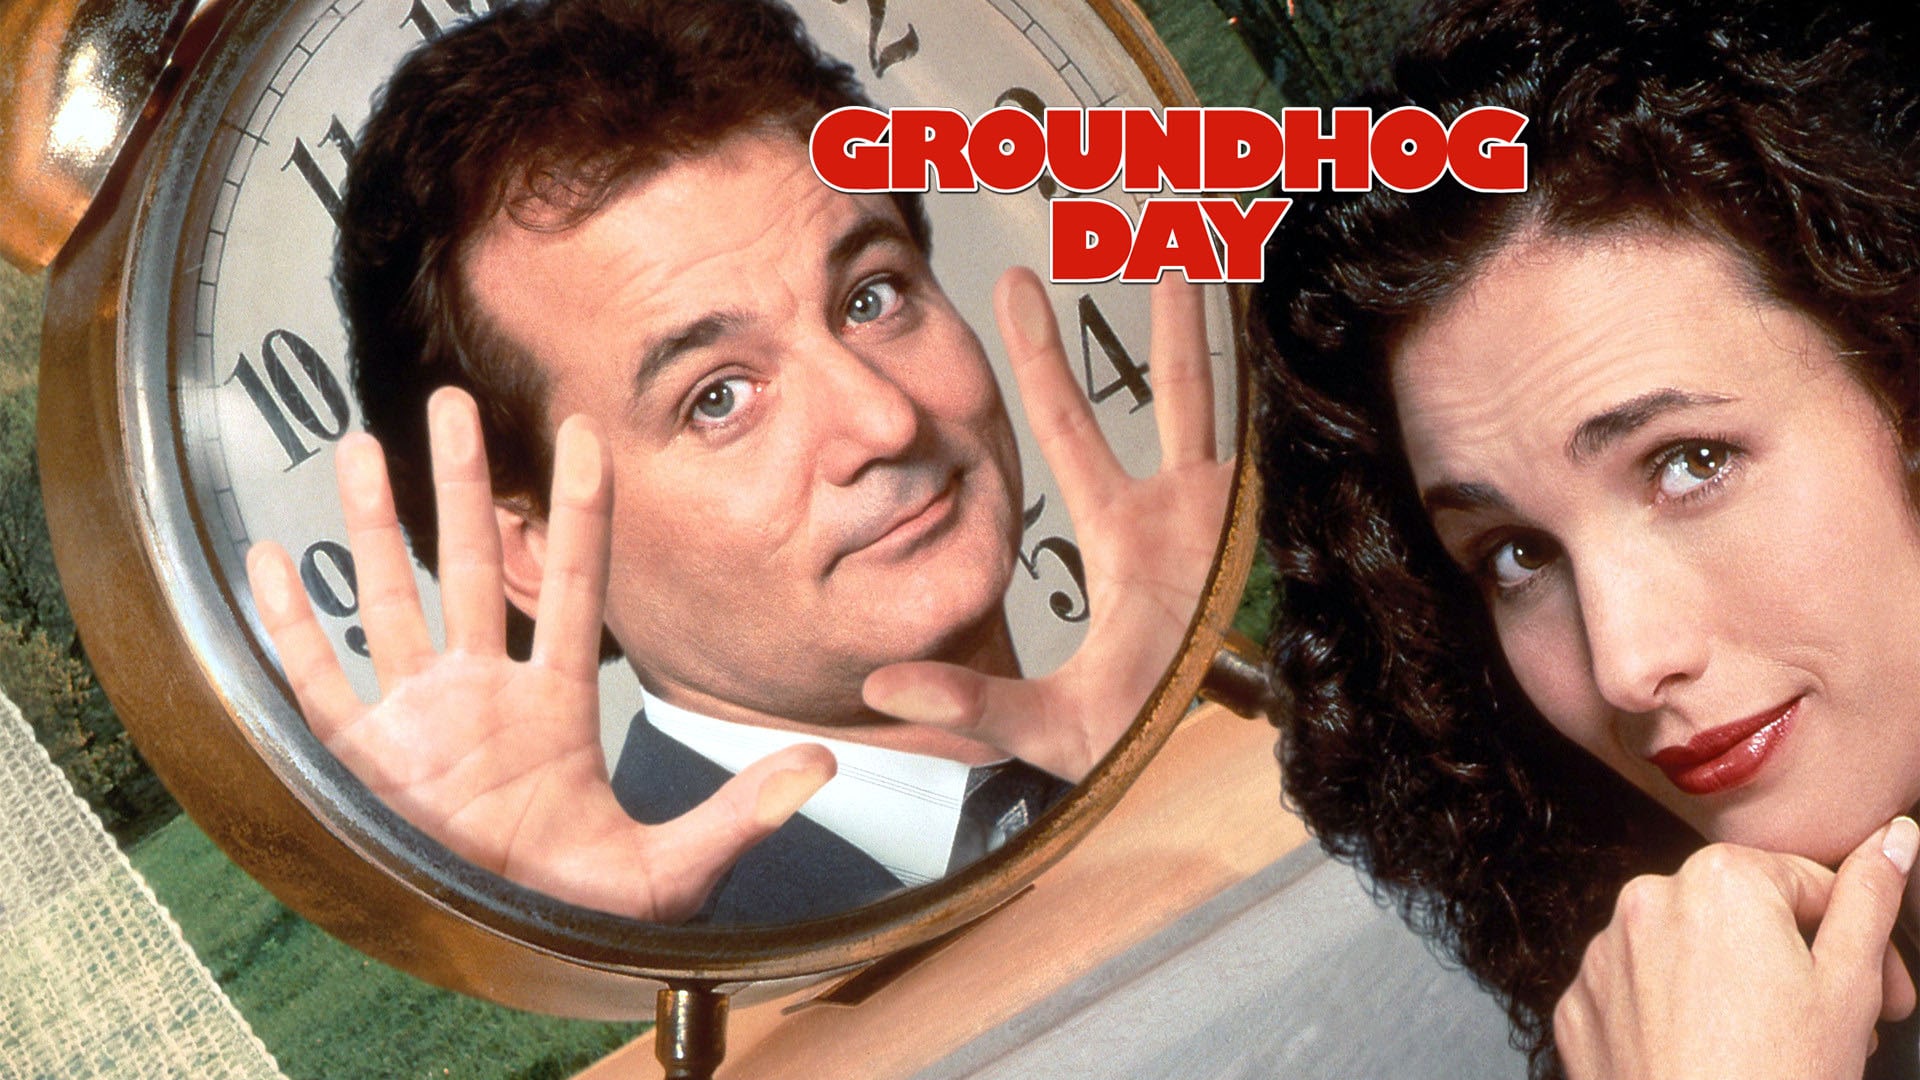 Watch Groundhog Day Online | Stream Full Movies